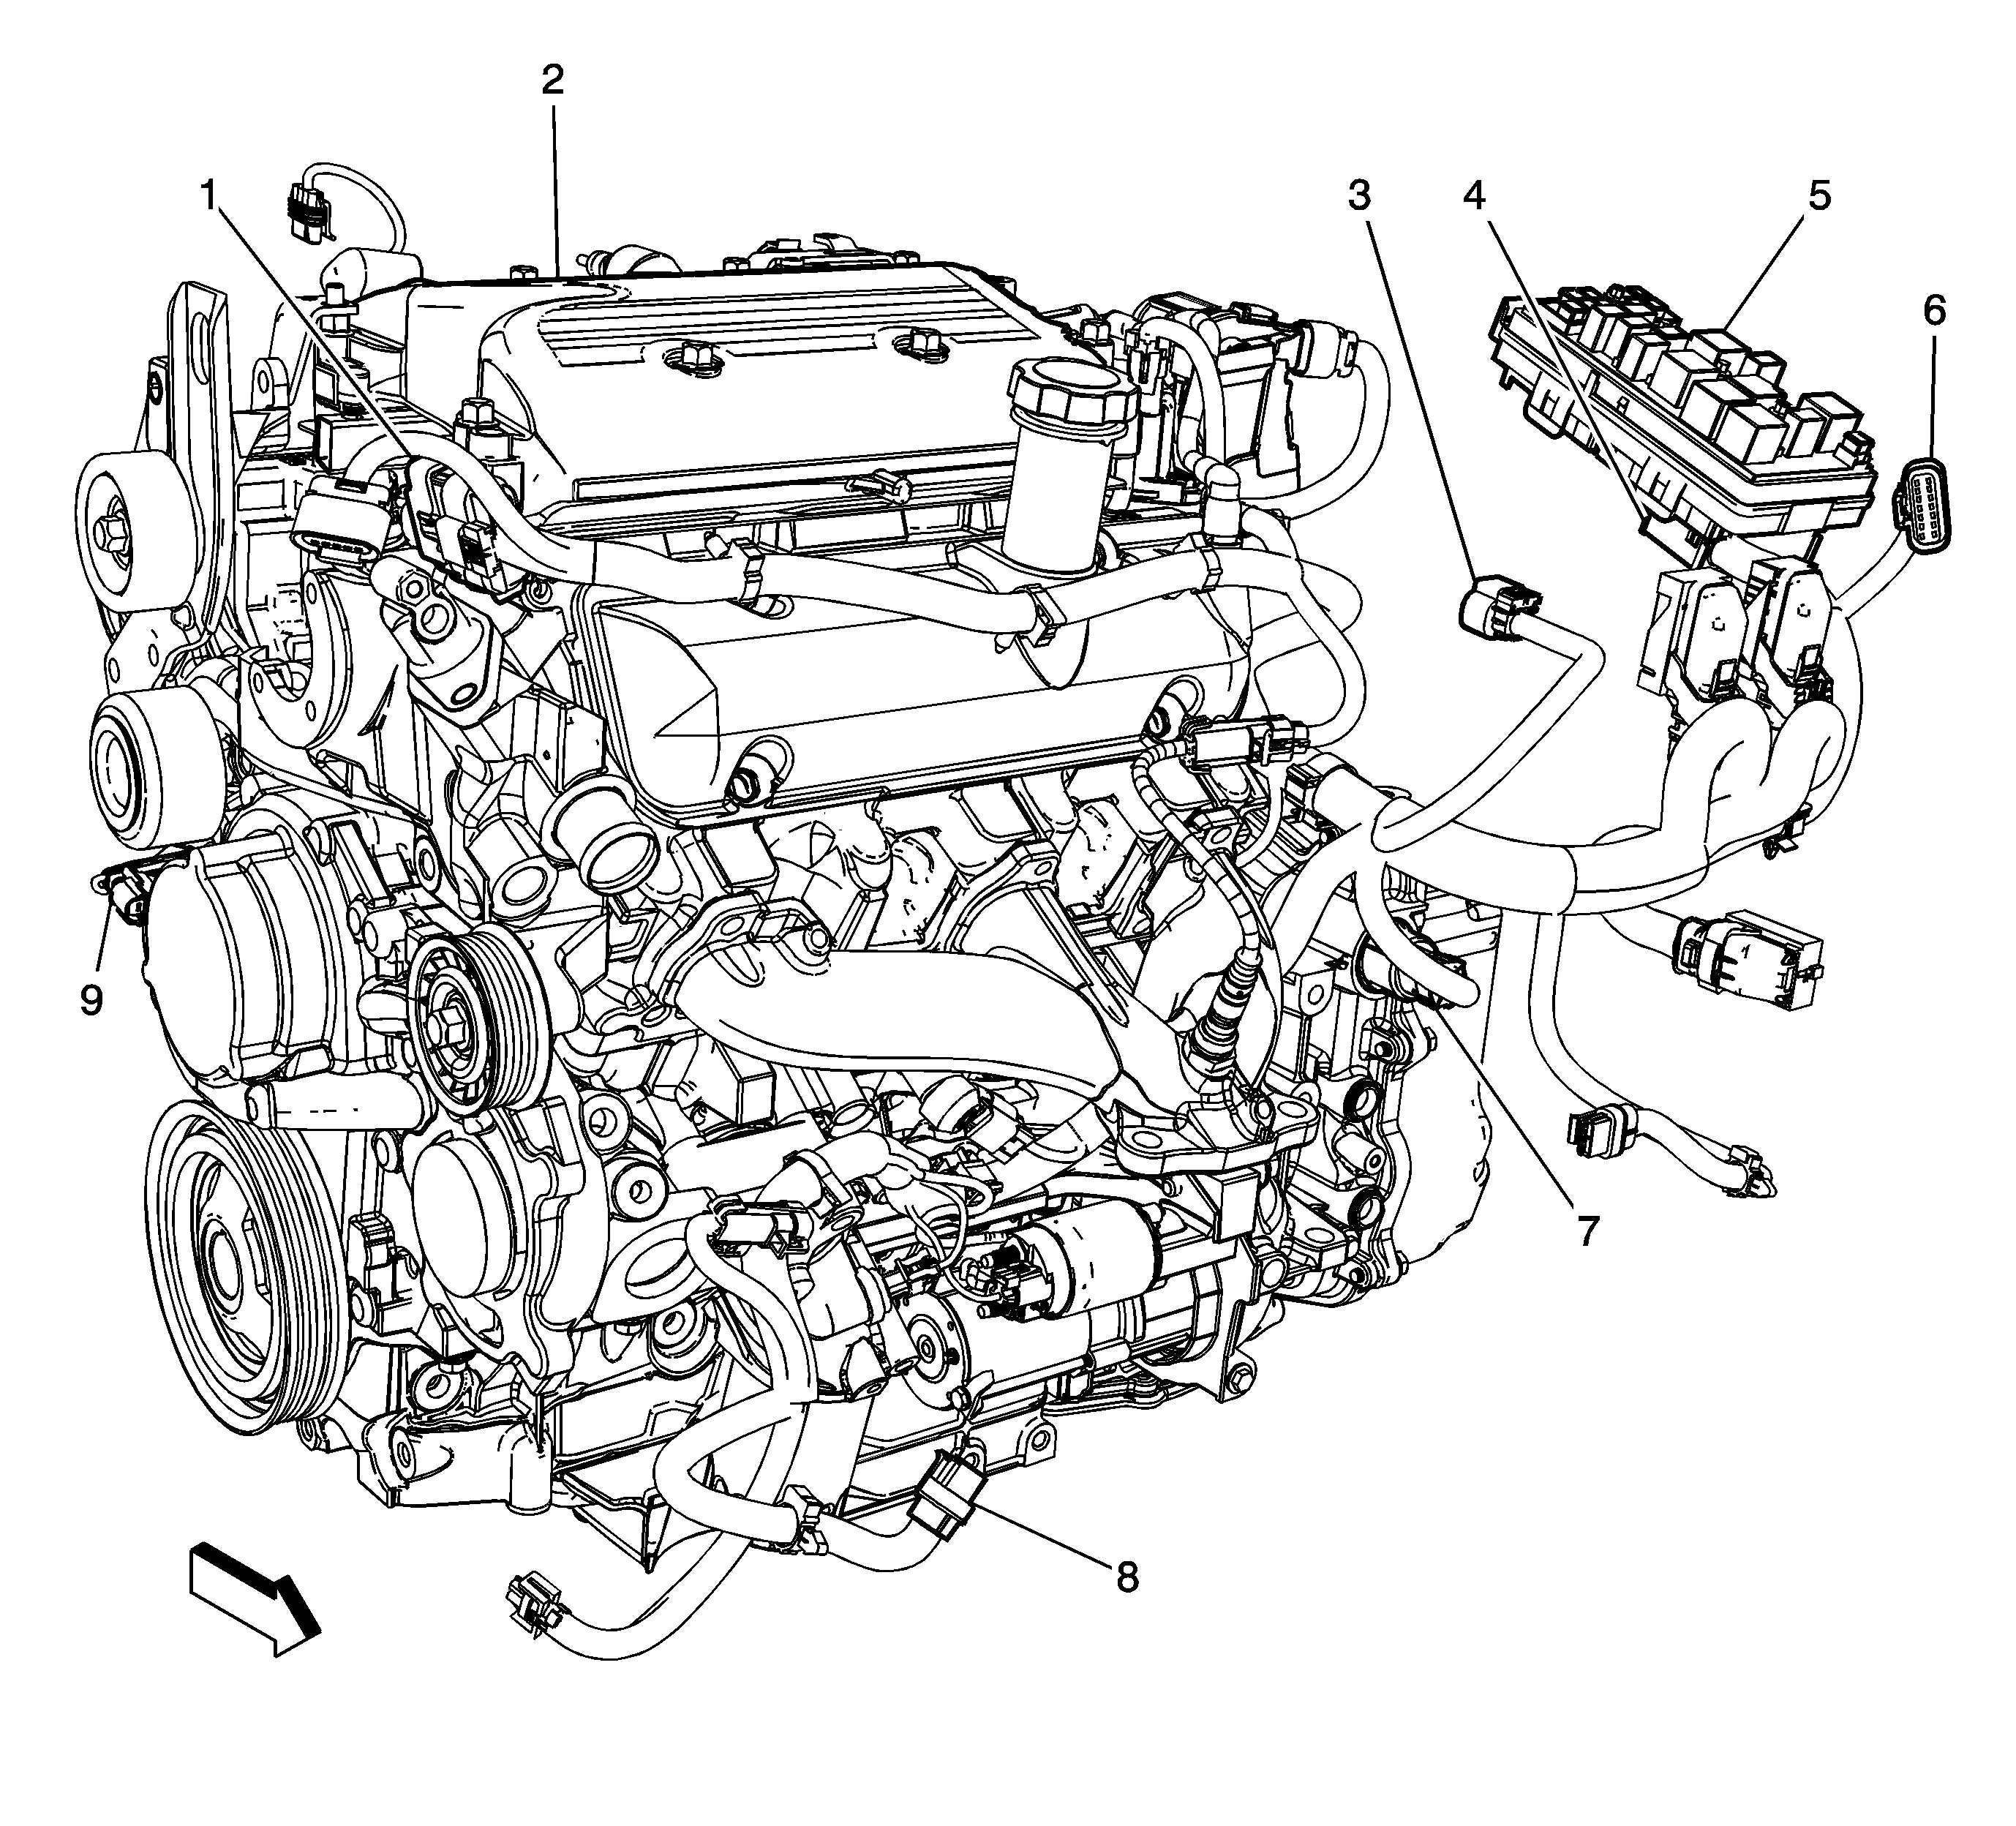 2008 Chevy Malibu Ltz 3.6 Diagram Engine 2010 Chevy Malibu 2 4 Labeled Engine Diagram Wiring